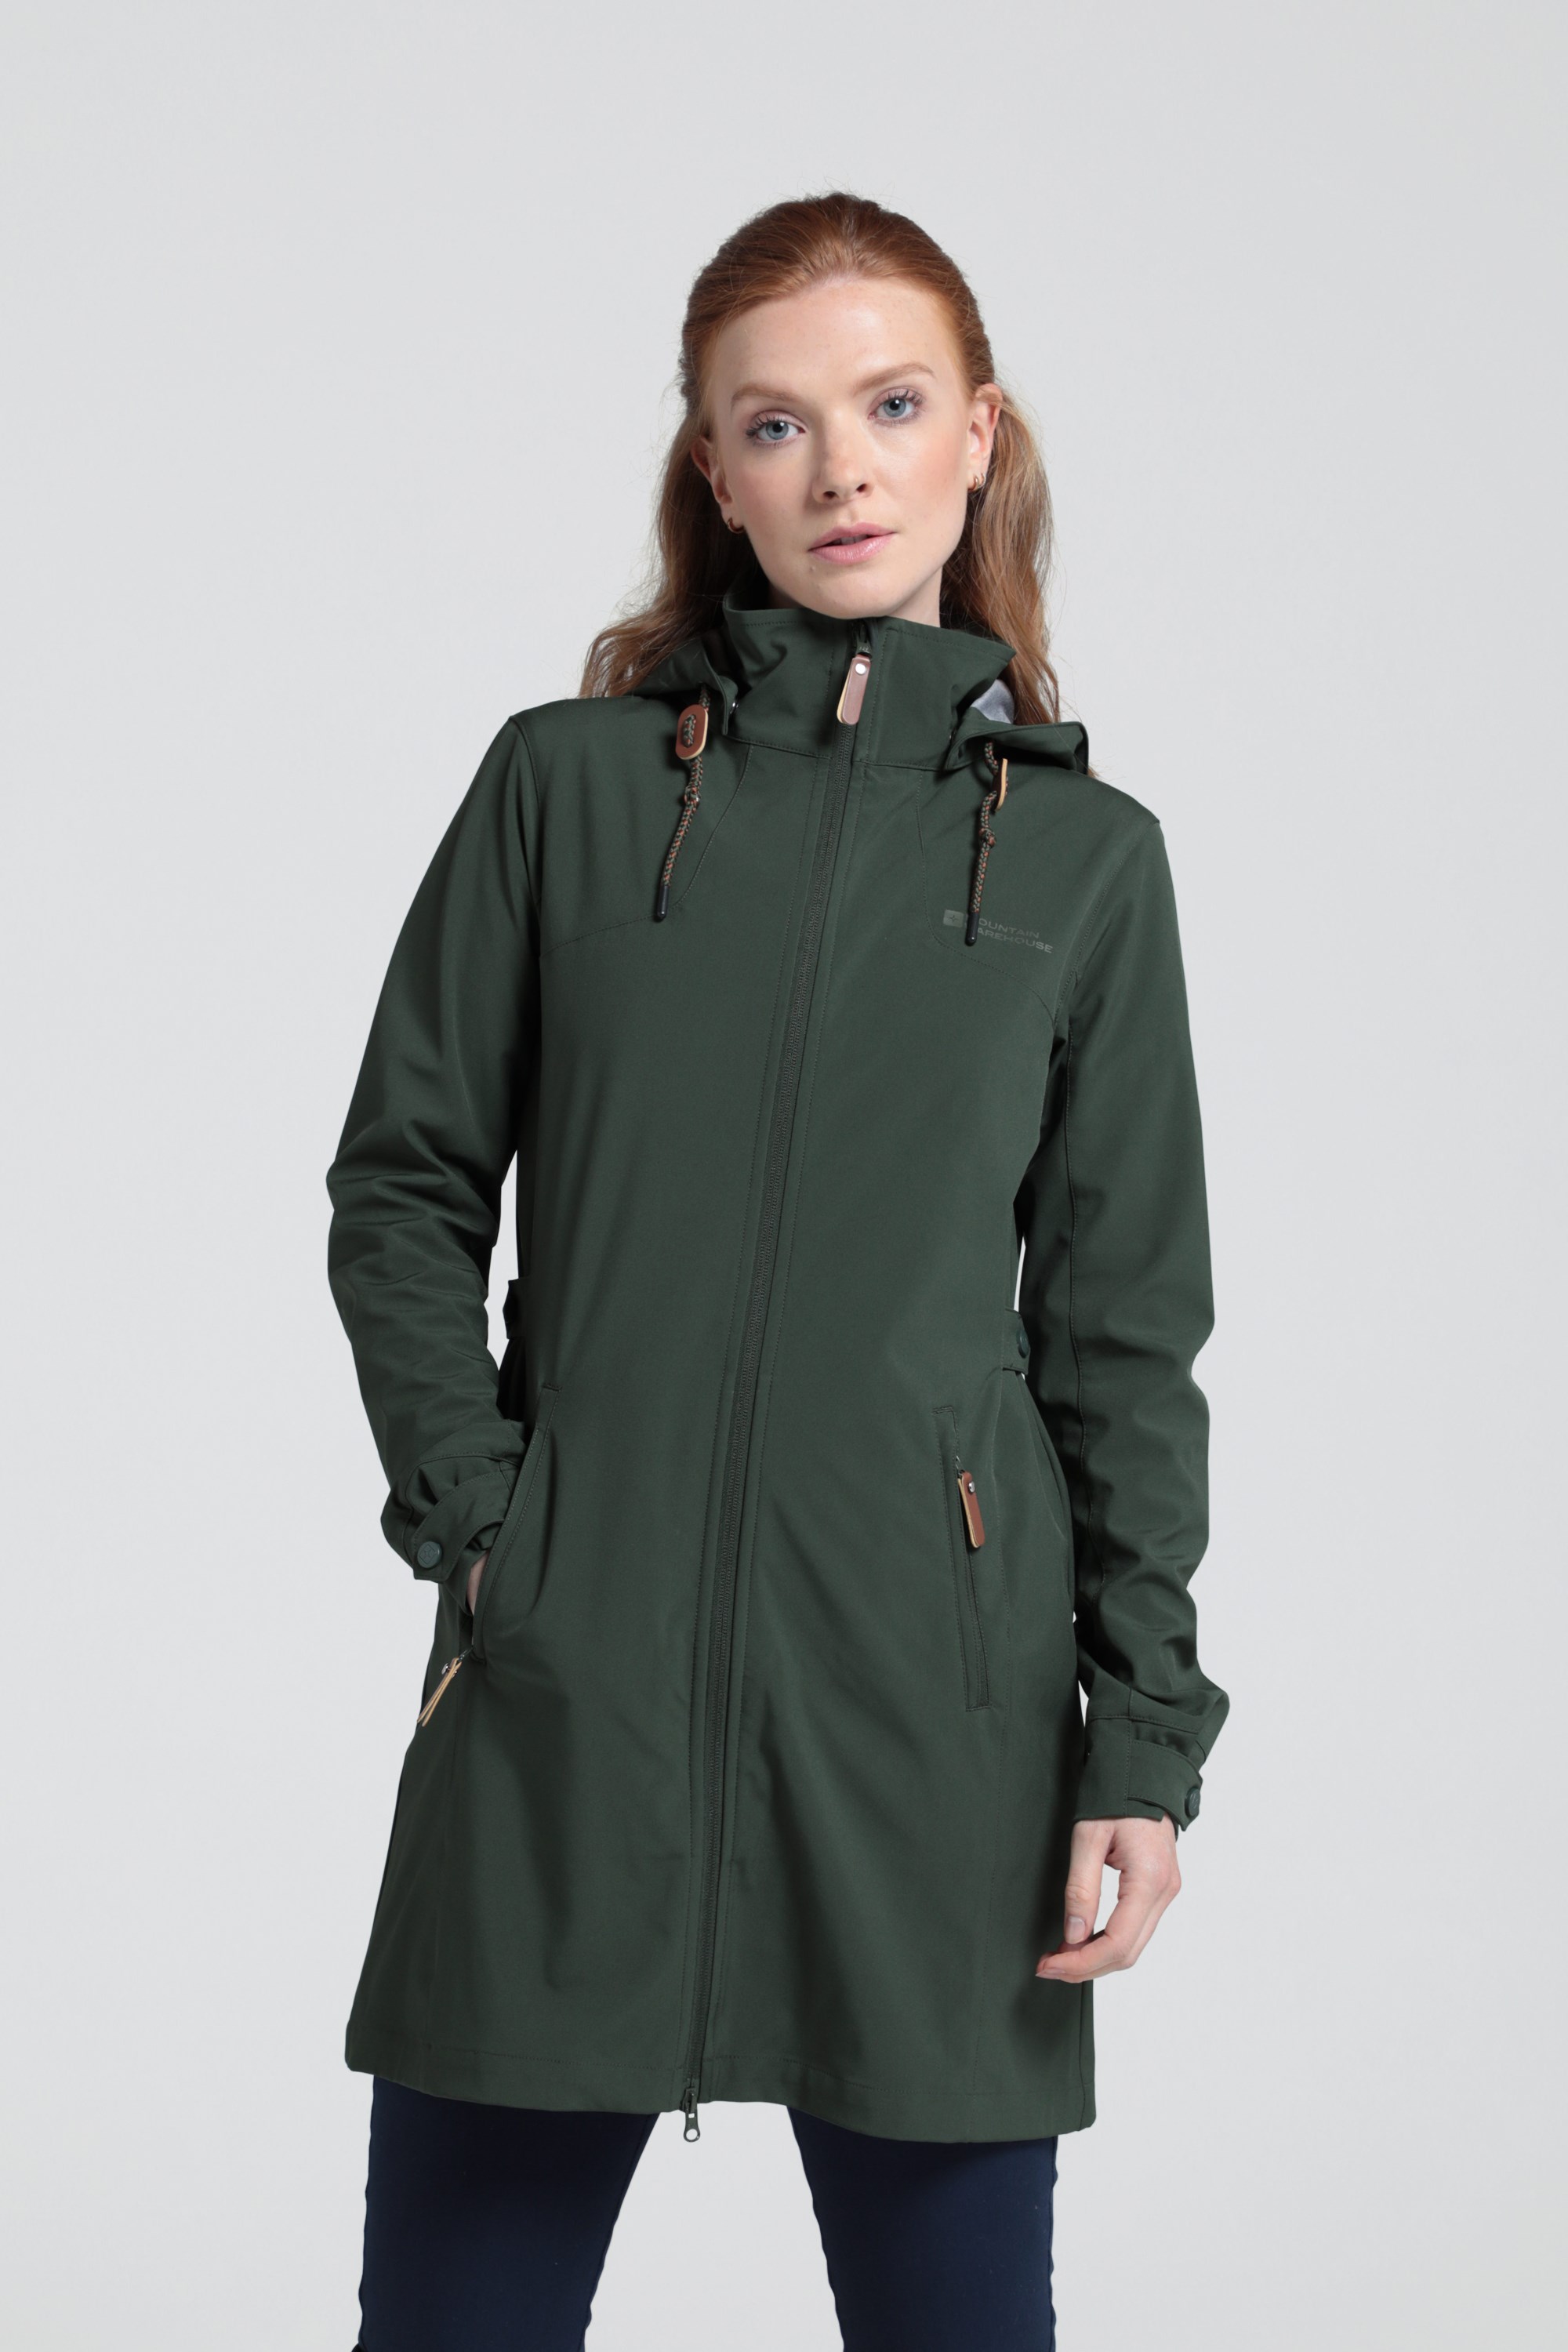 Mountain Warehouse Wms Commuter Womens Waterproof Jacket 